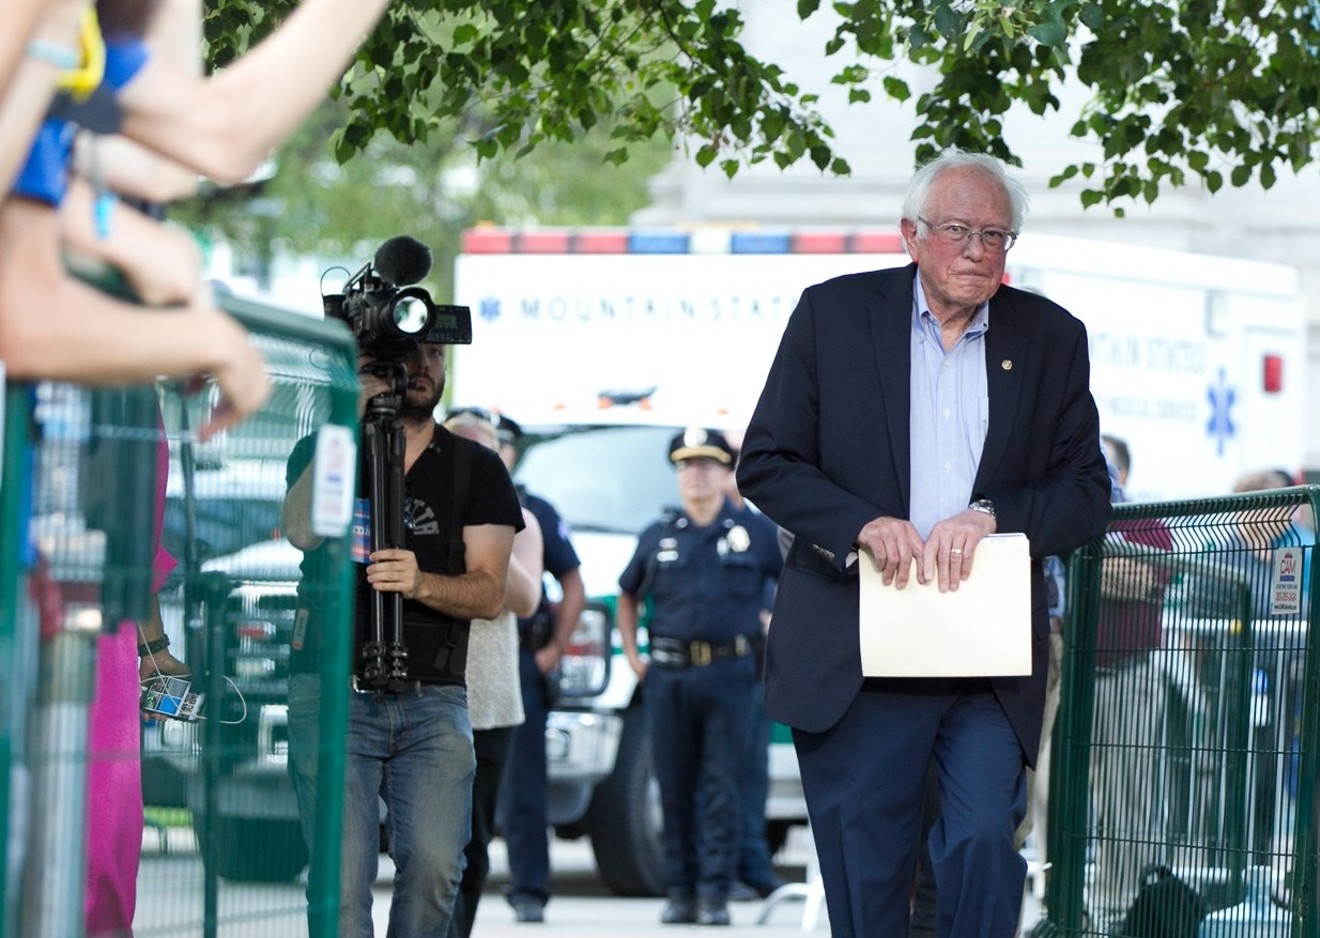 Democratic hopeful Bernie Sanders just released an outline for his marijuana legalization plans.